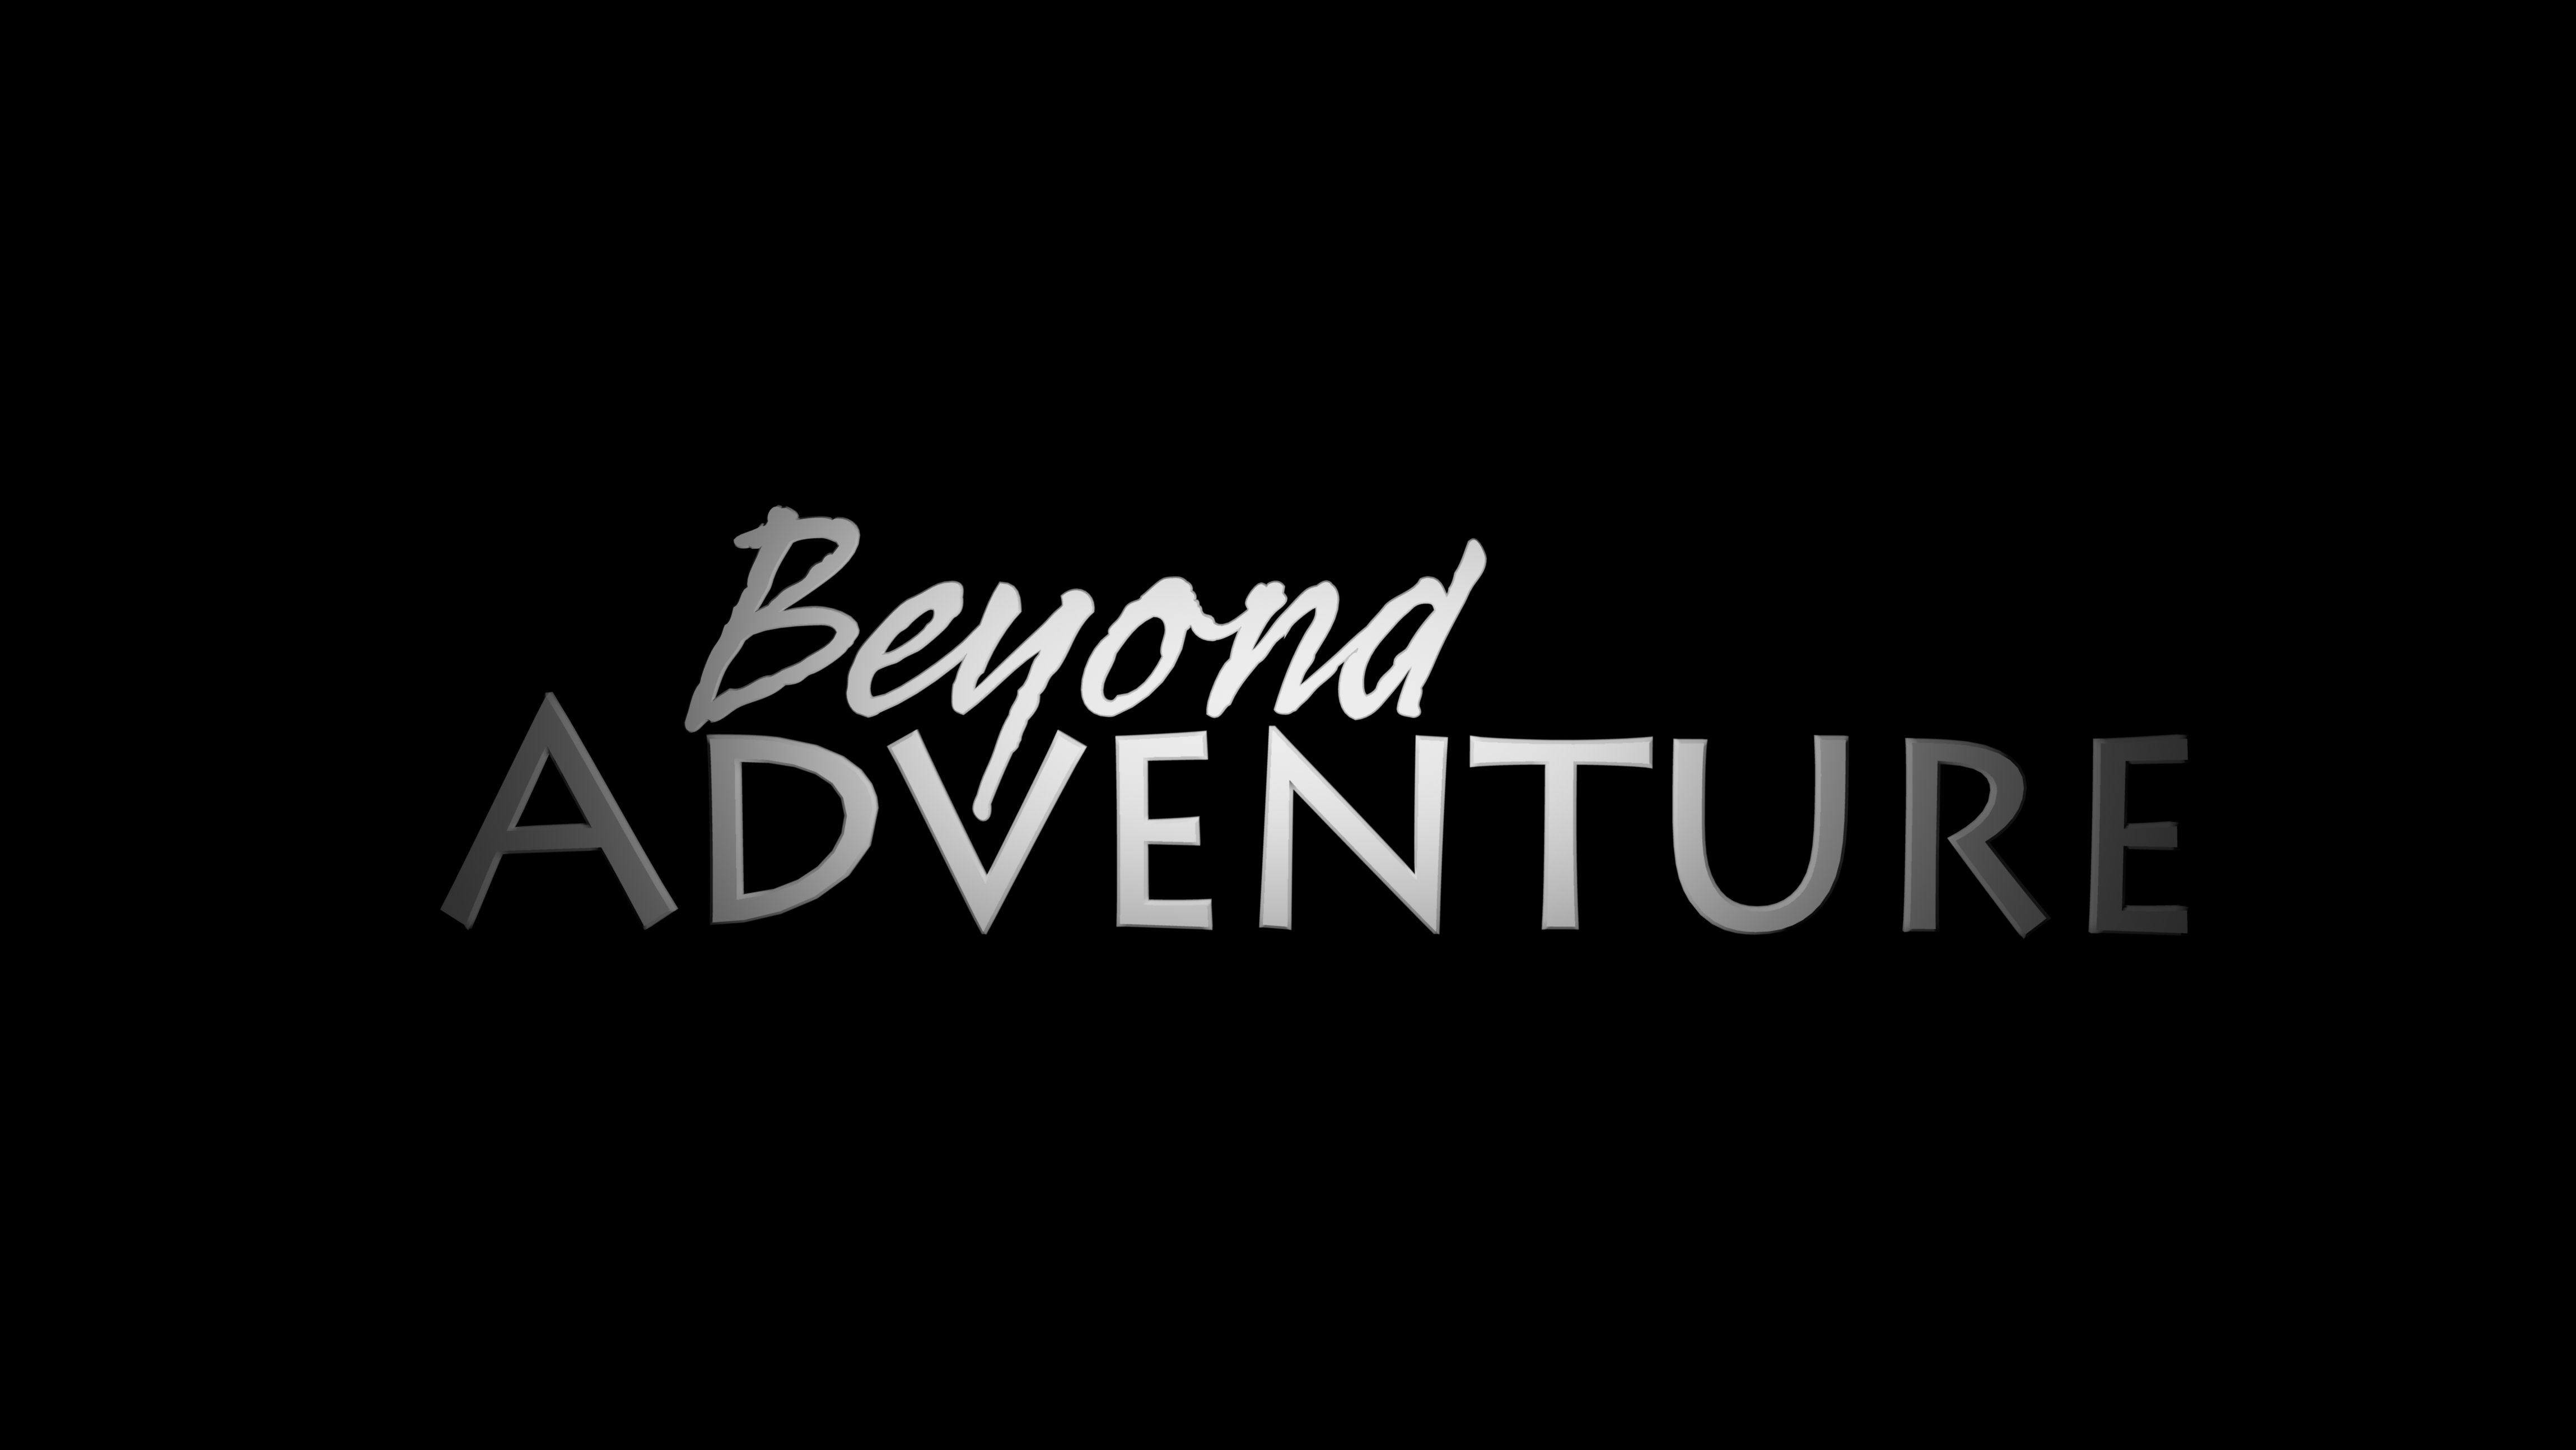 Beyond Adventure series trailer